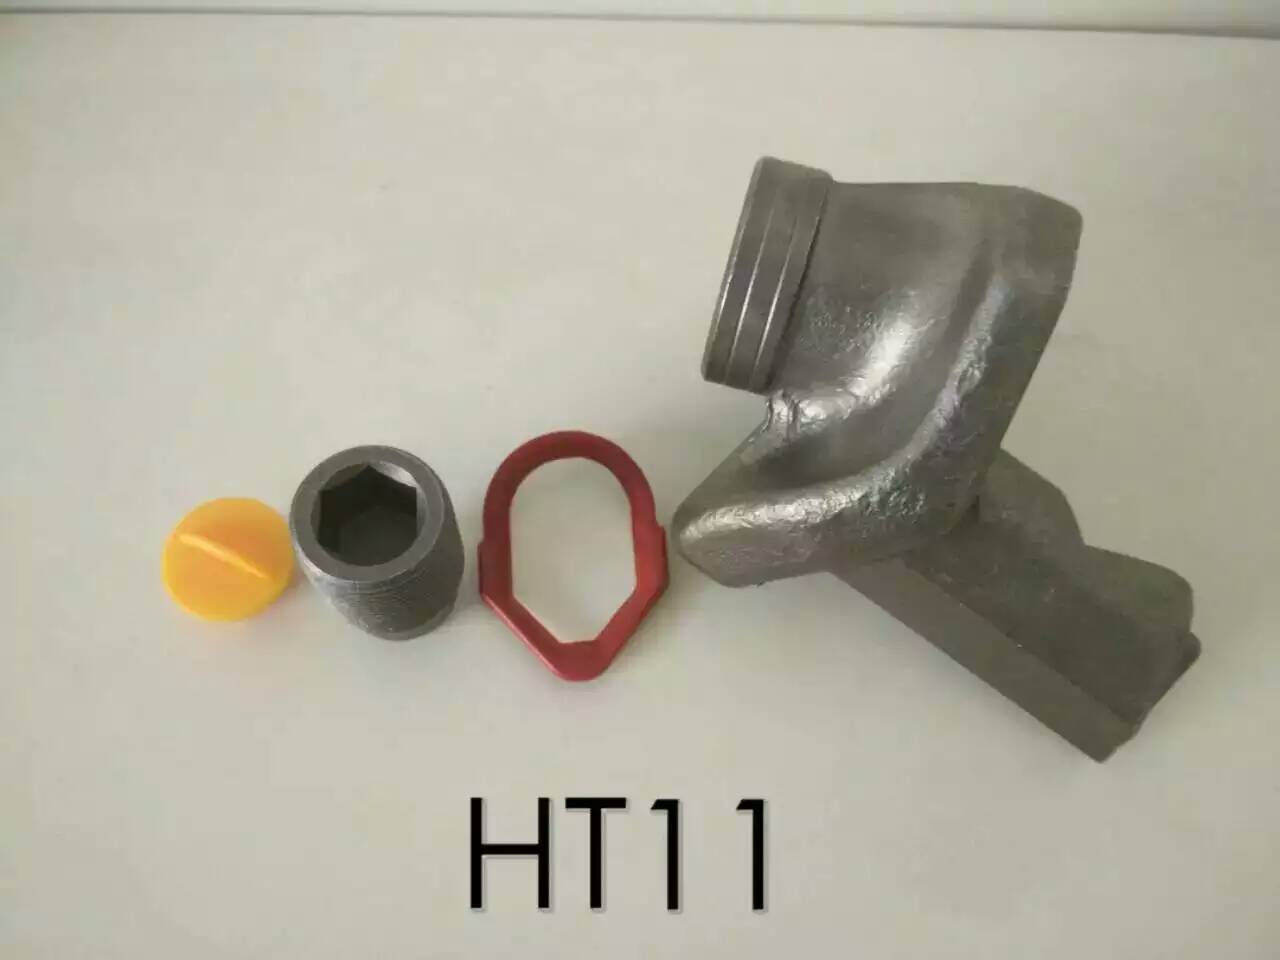 HT11 tool holder